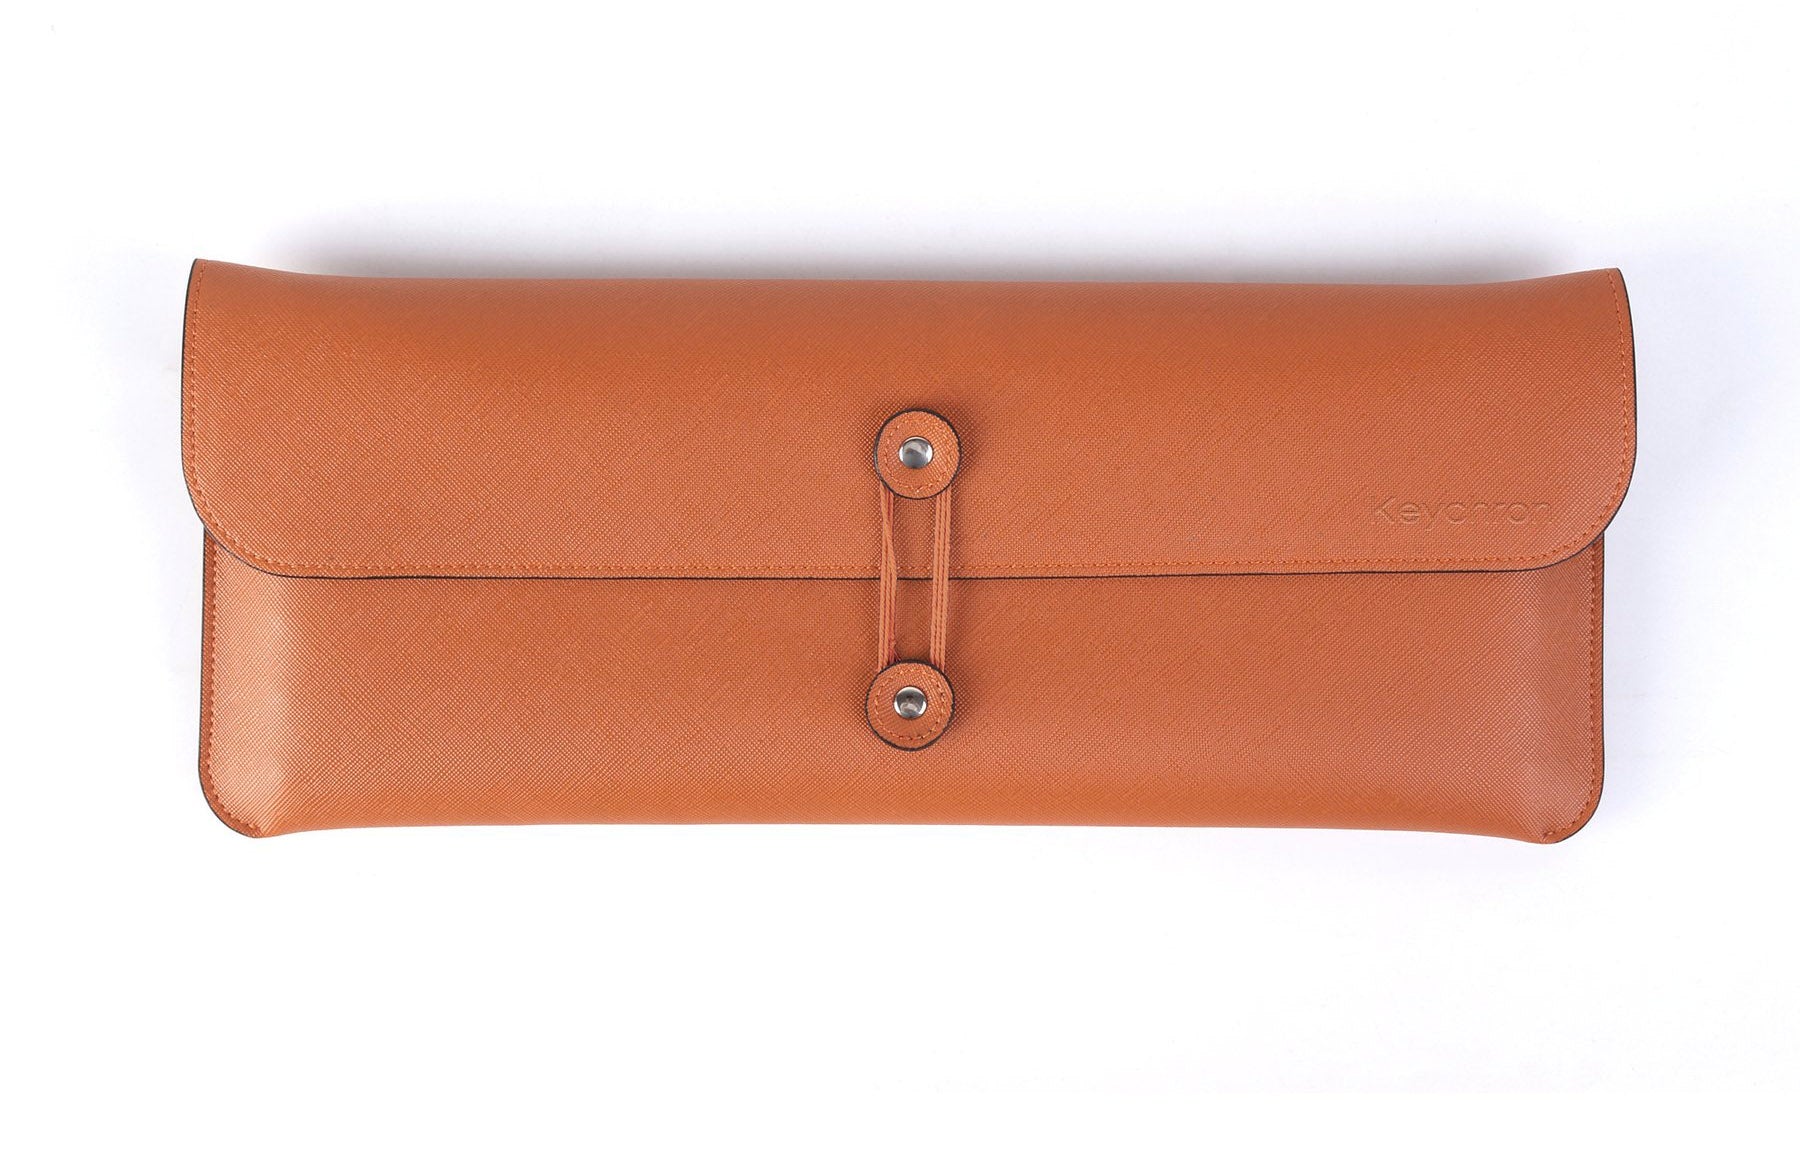 Keychron K3 / K12 Keyboard Bag - Orange Saffiano Leather Carrying Case MKVSTTIHQ0 |0|